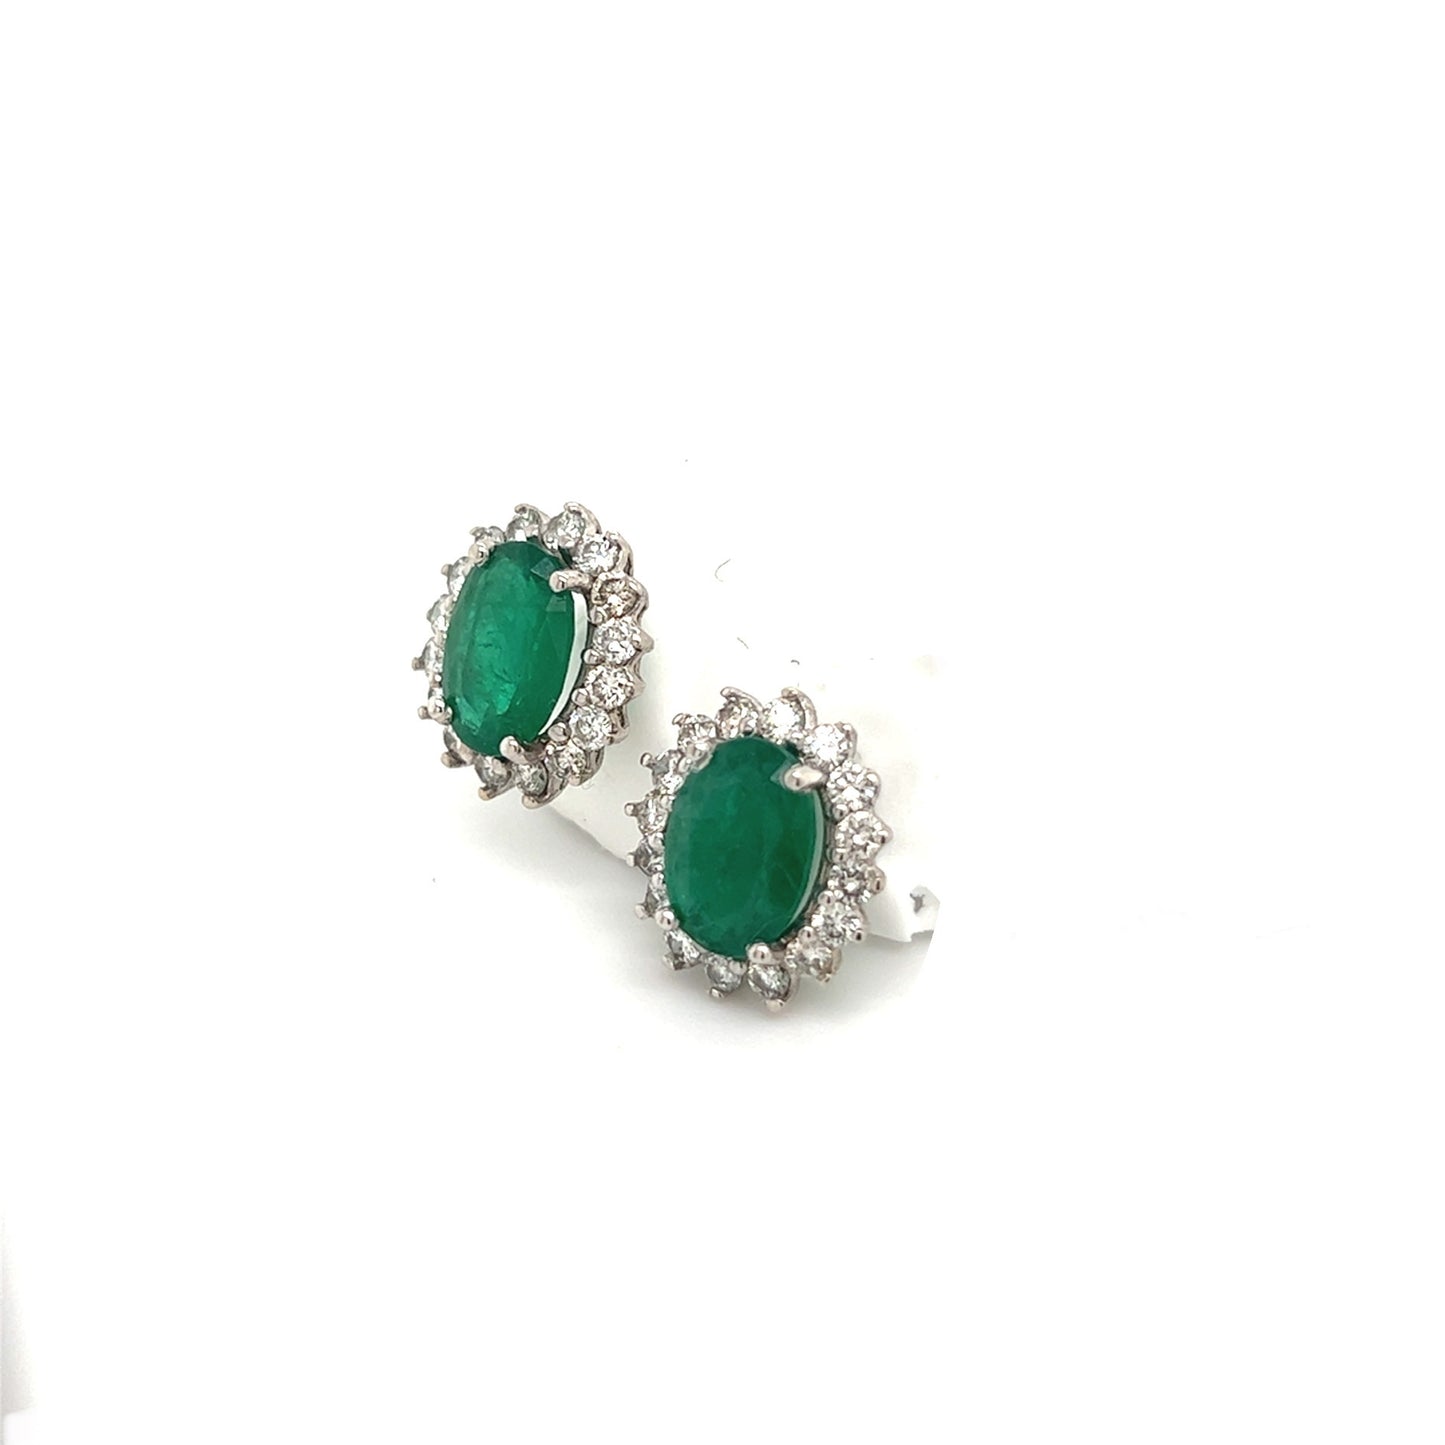 Natural Emerald Diamond Earrings 14k Gold 2.87 TCW Certified $6,950 211888